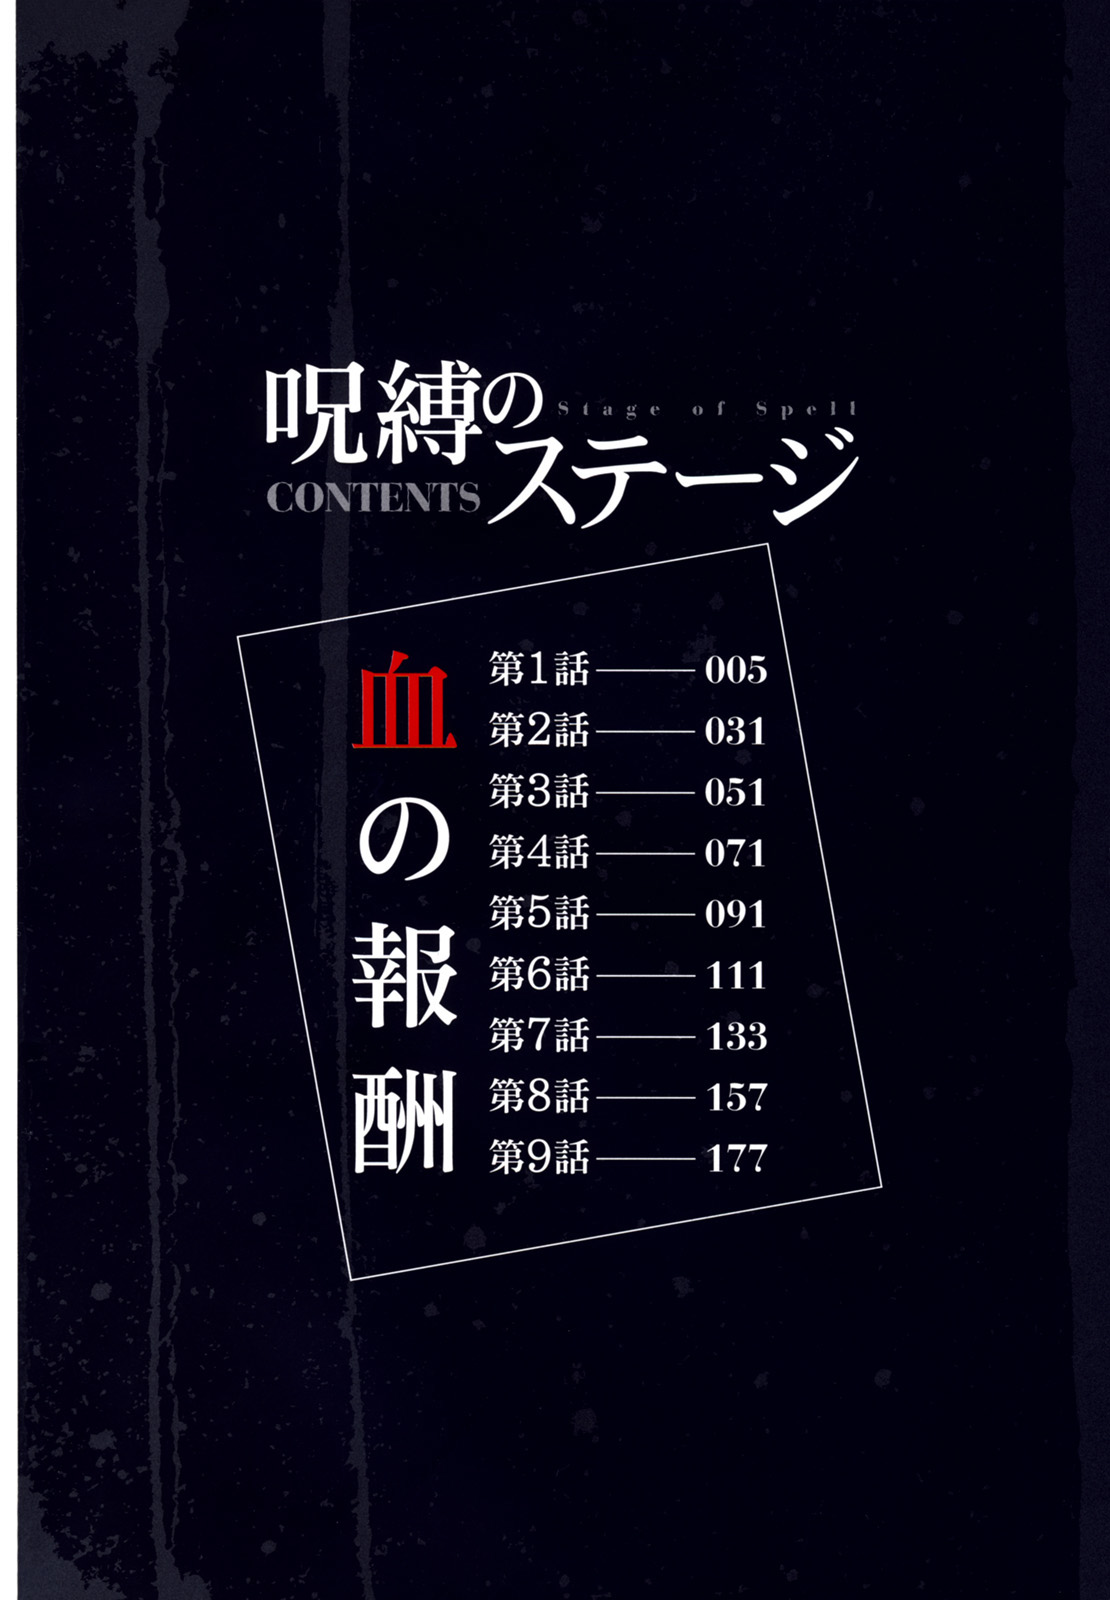 Hirohisa Onikubo - Jubaku no Stage (Stage of Spell) [鬼窪浩久] - 呪縛のステージ